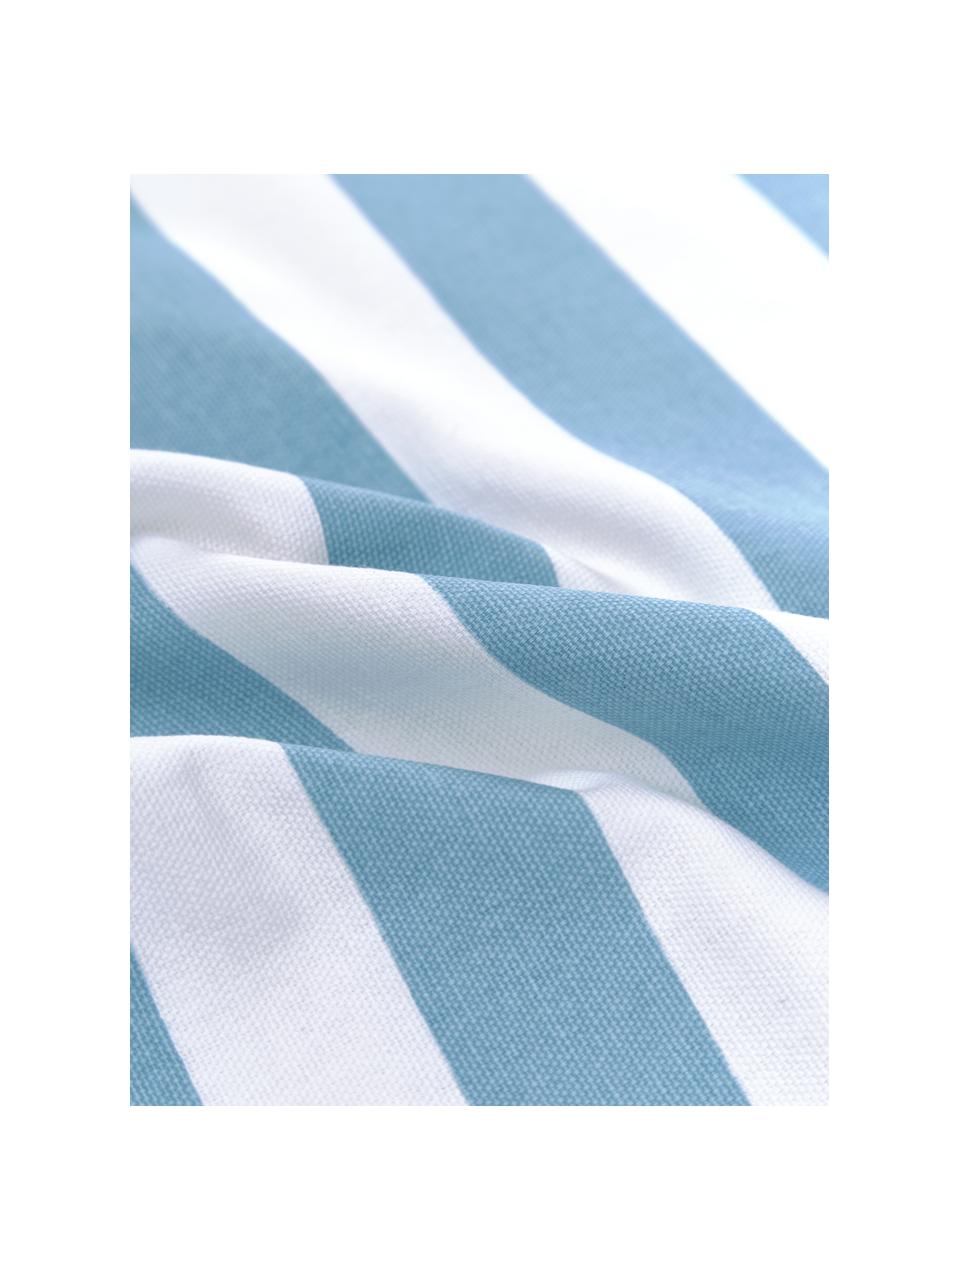 Gestreifte Kissenhülle Timon in Blau/Weiß, 100% Baumwolle, Blau, Weiß, B 30 x L 50 cm